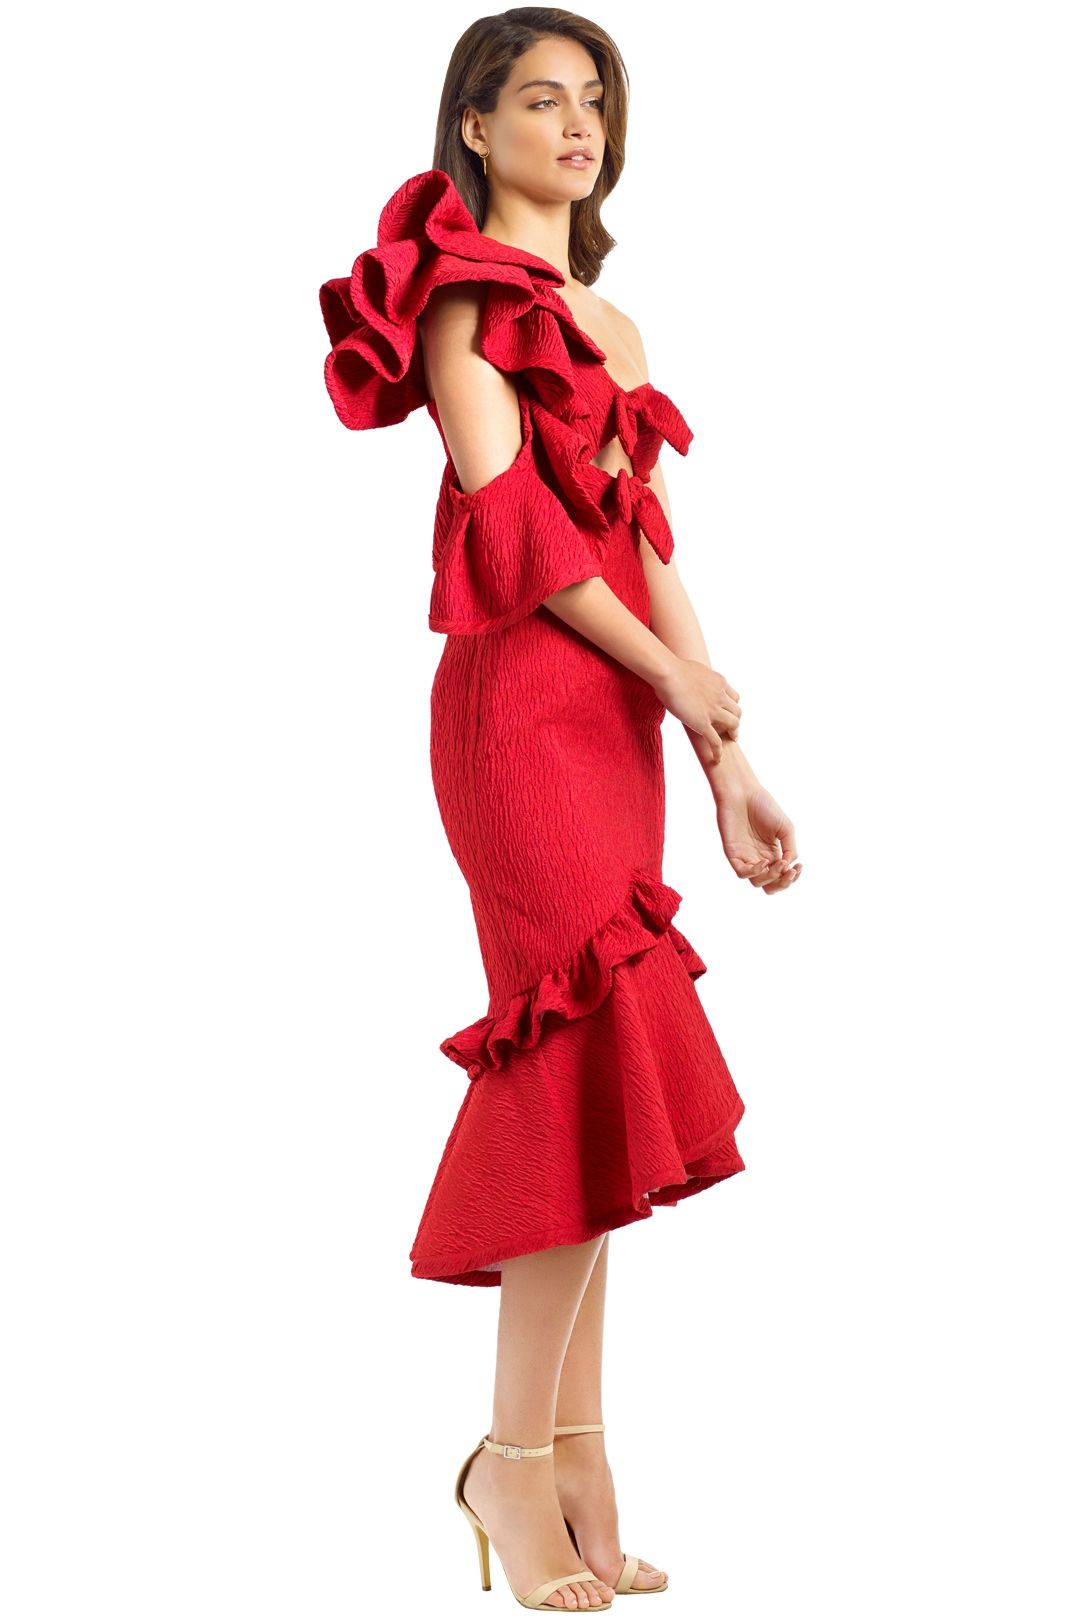 Nicola Finetti - Deidre Dress - Red - Side